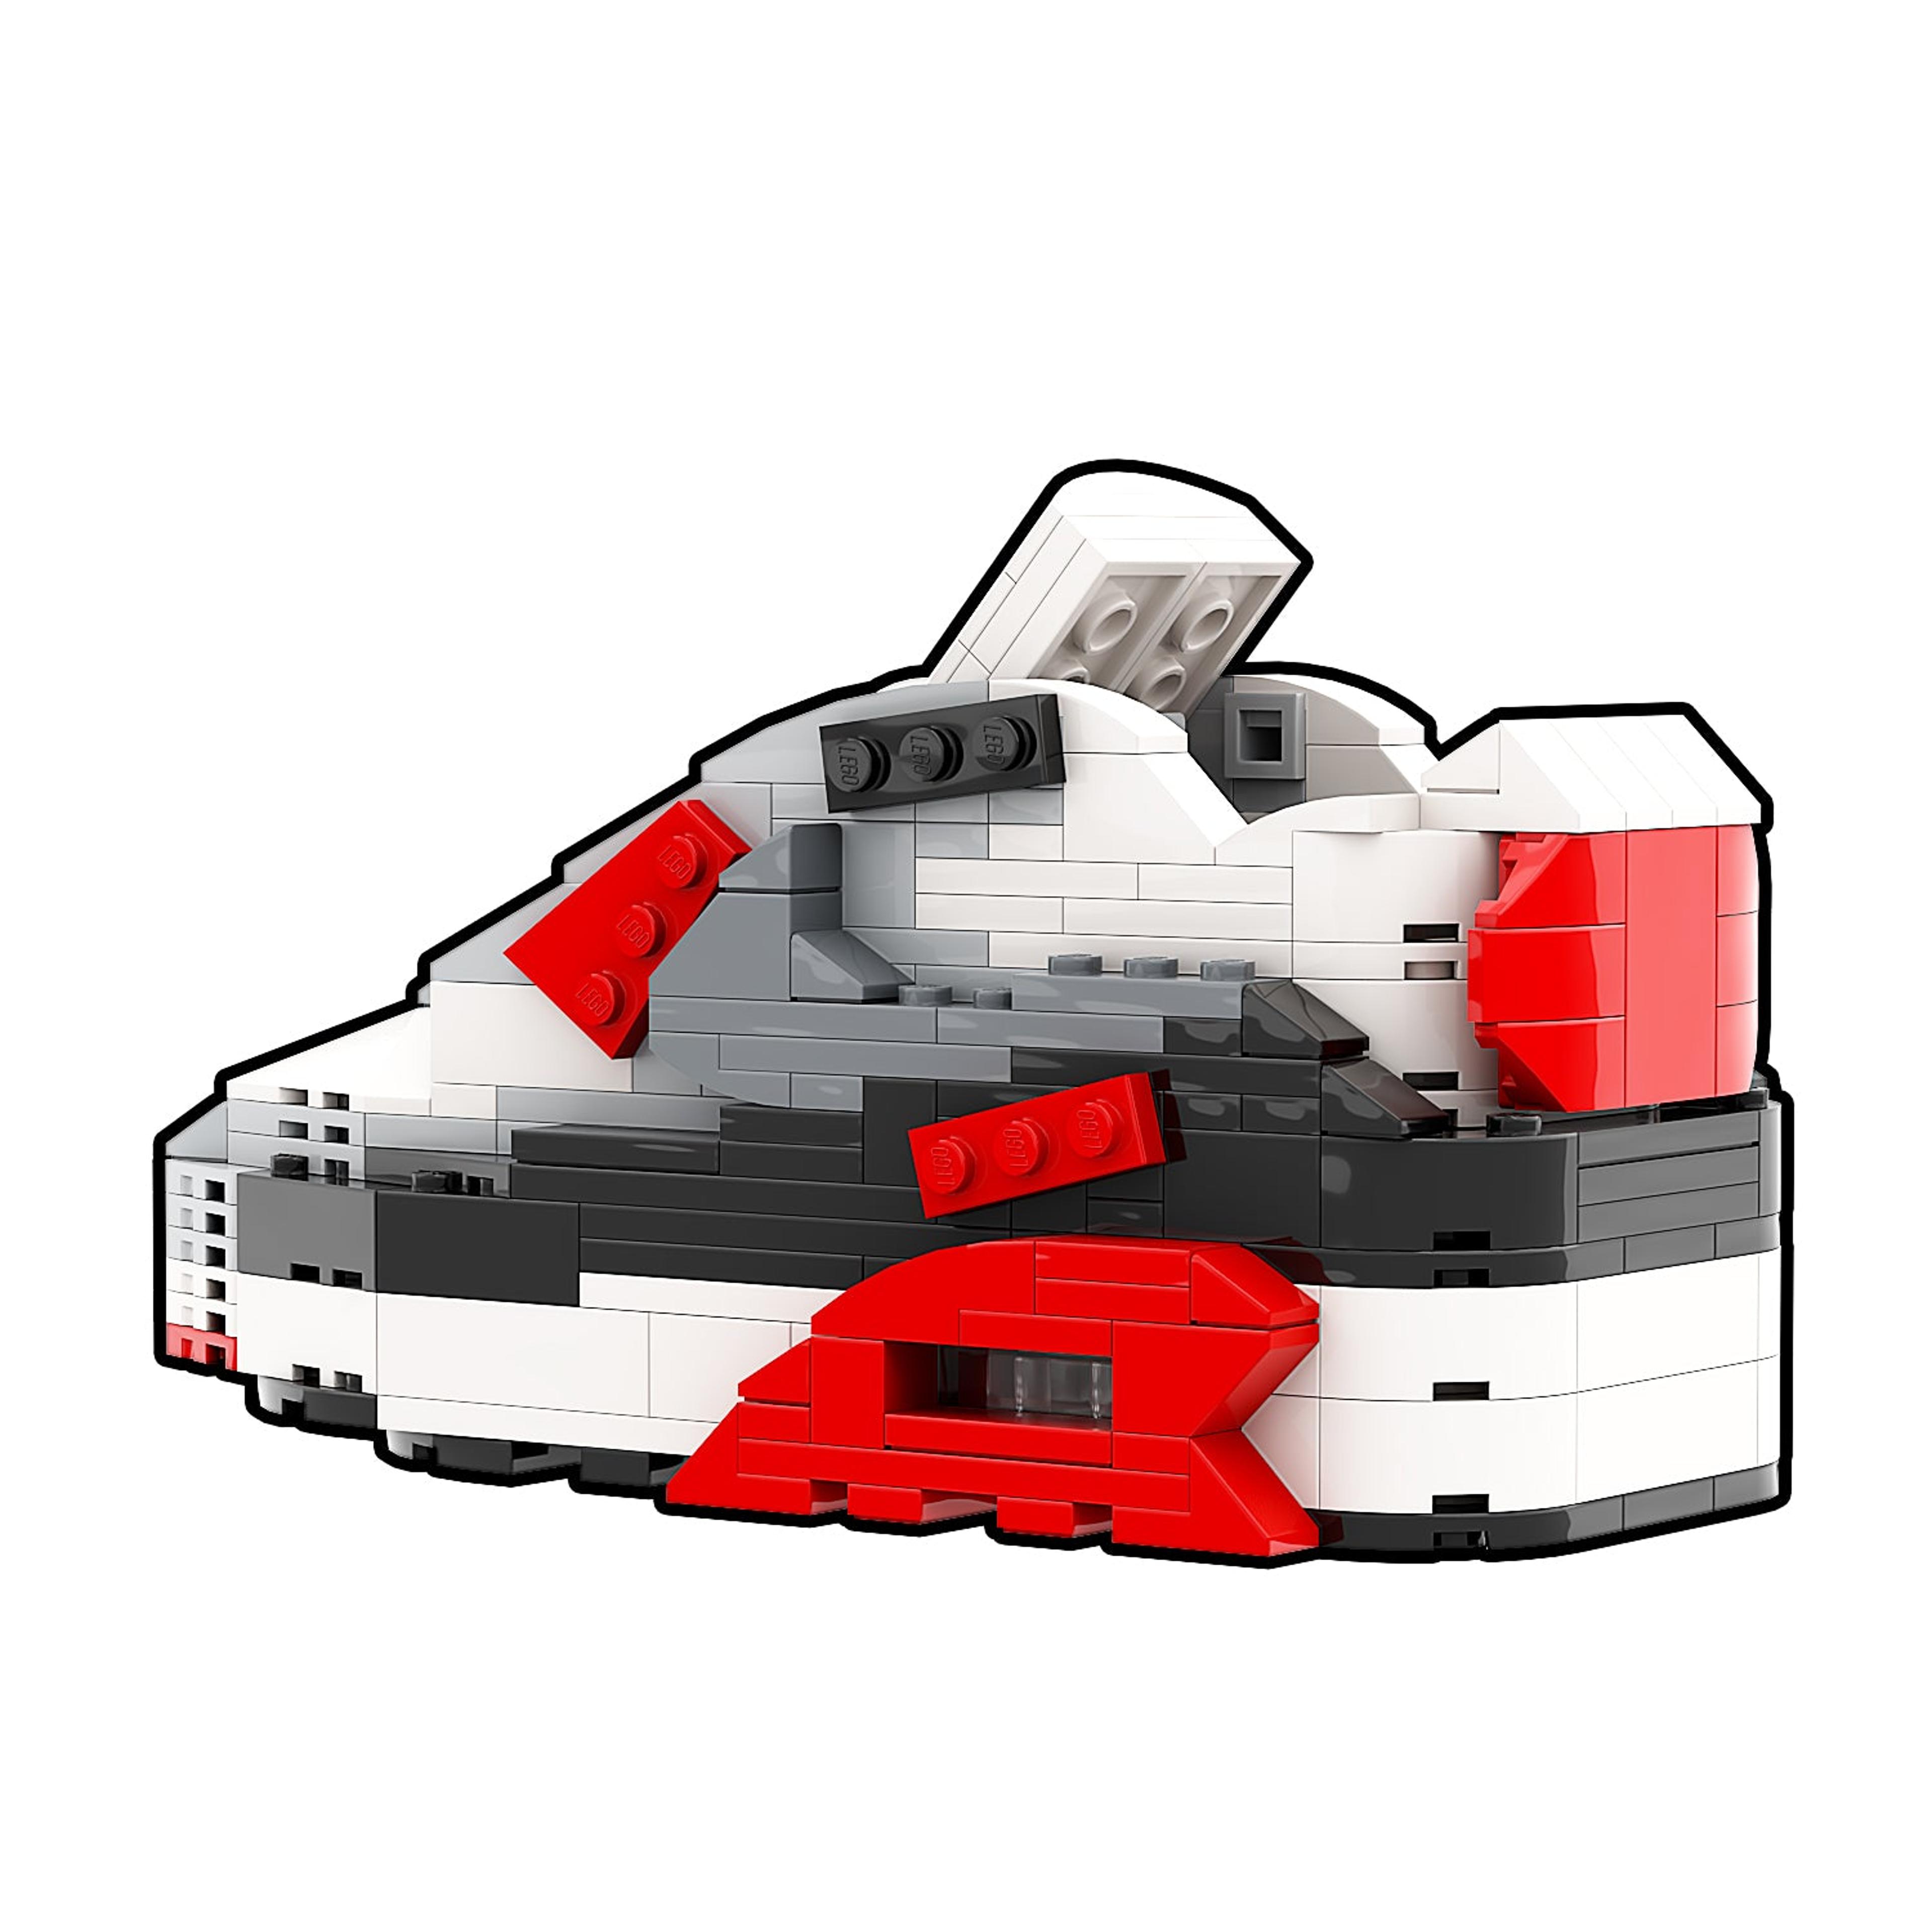 Alternate View 3 of REGULAR "Air Max 90 Infrared" Sneaker Bricks with Mini Figure